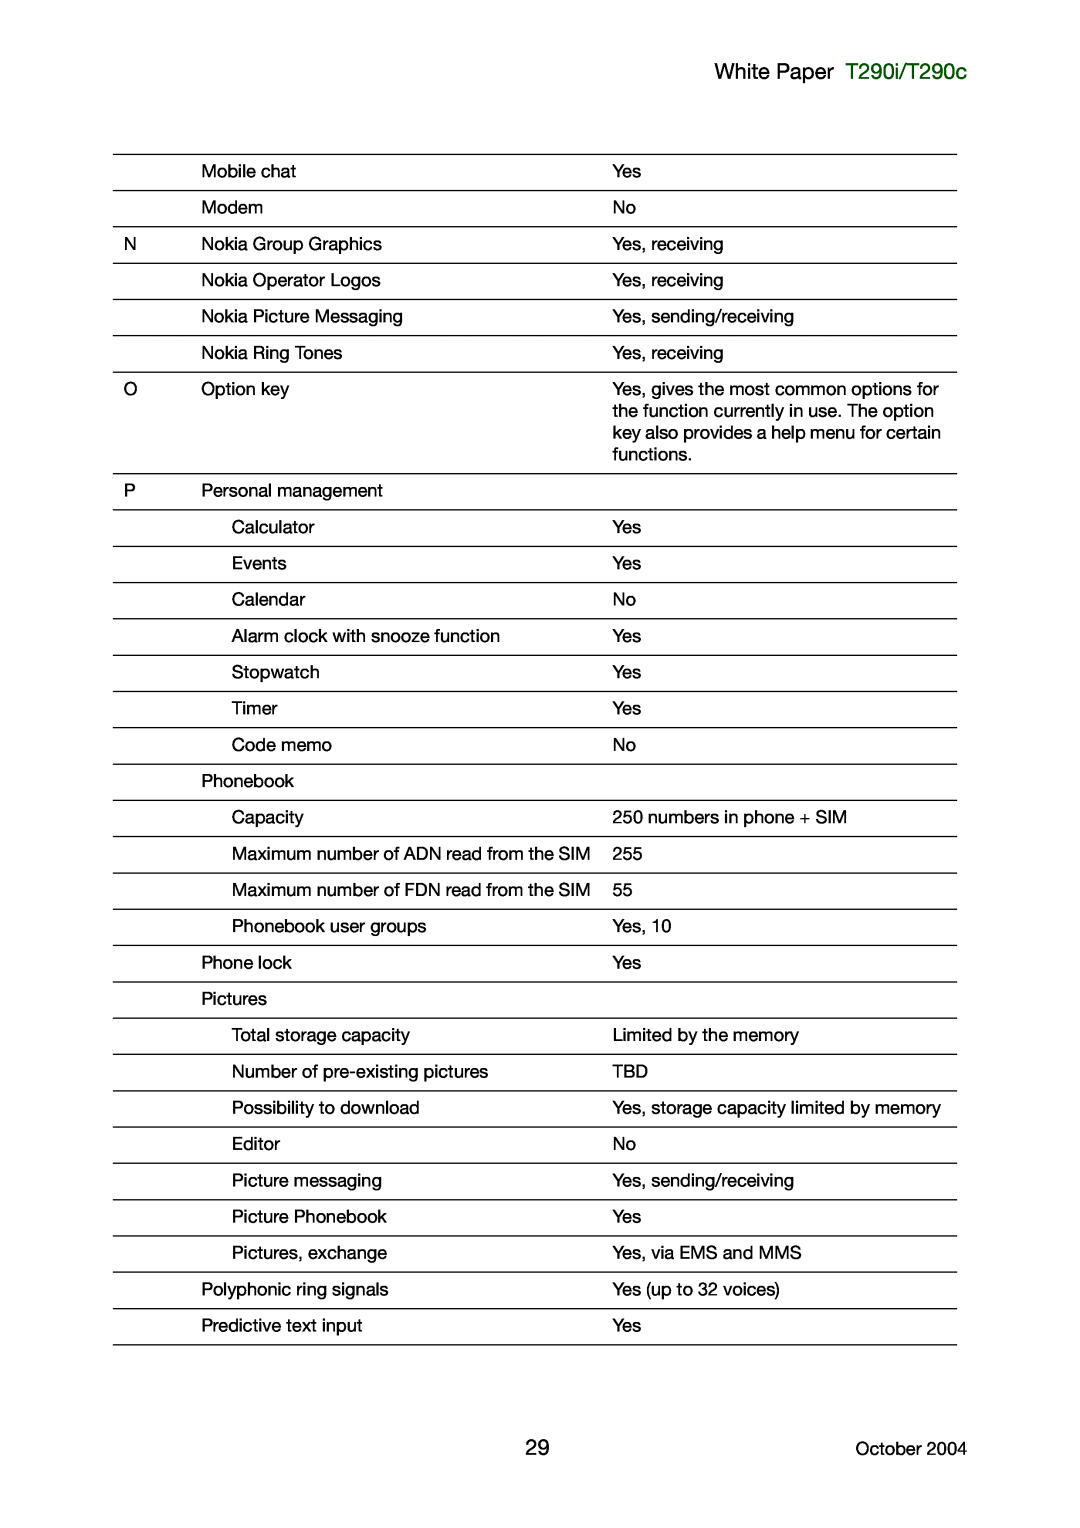 Sony Ericsson manual White Paper T290i/T290c 